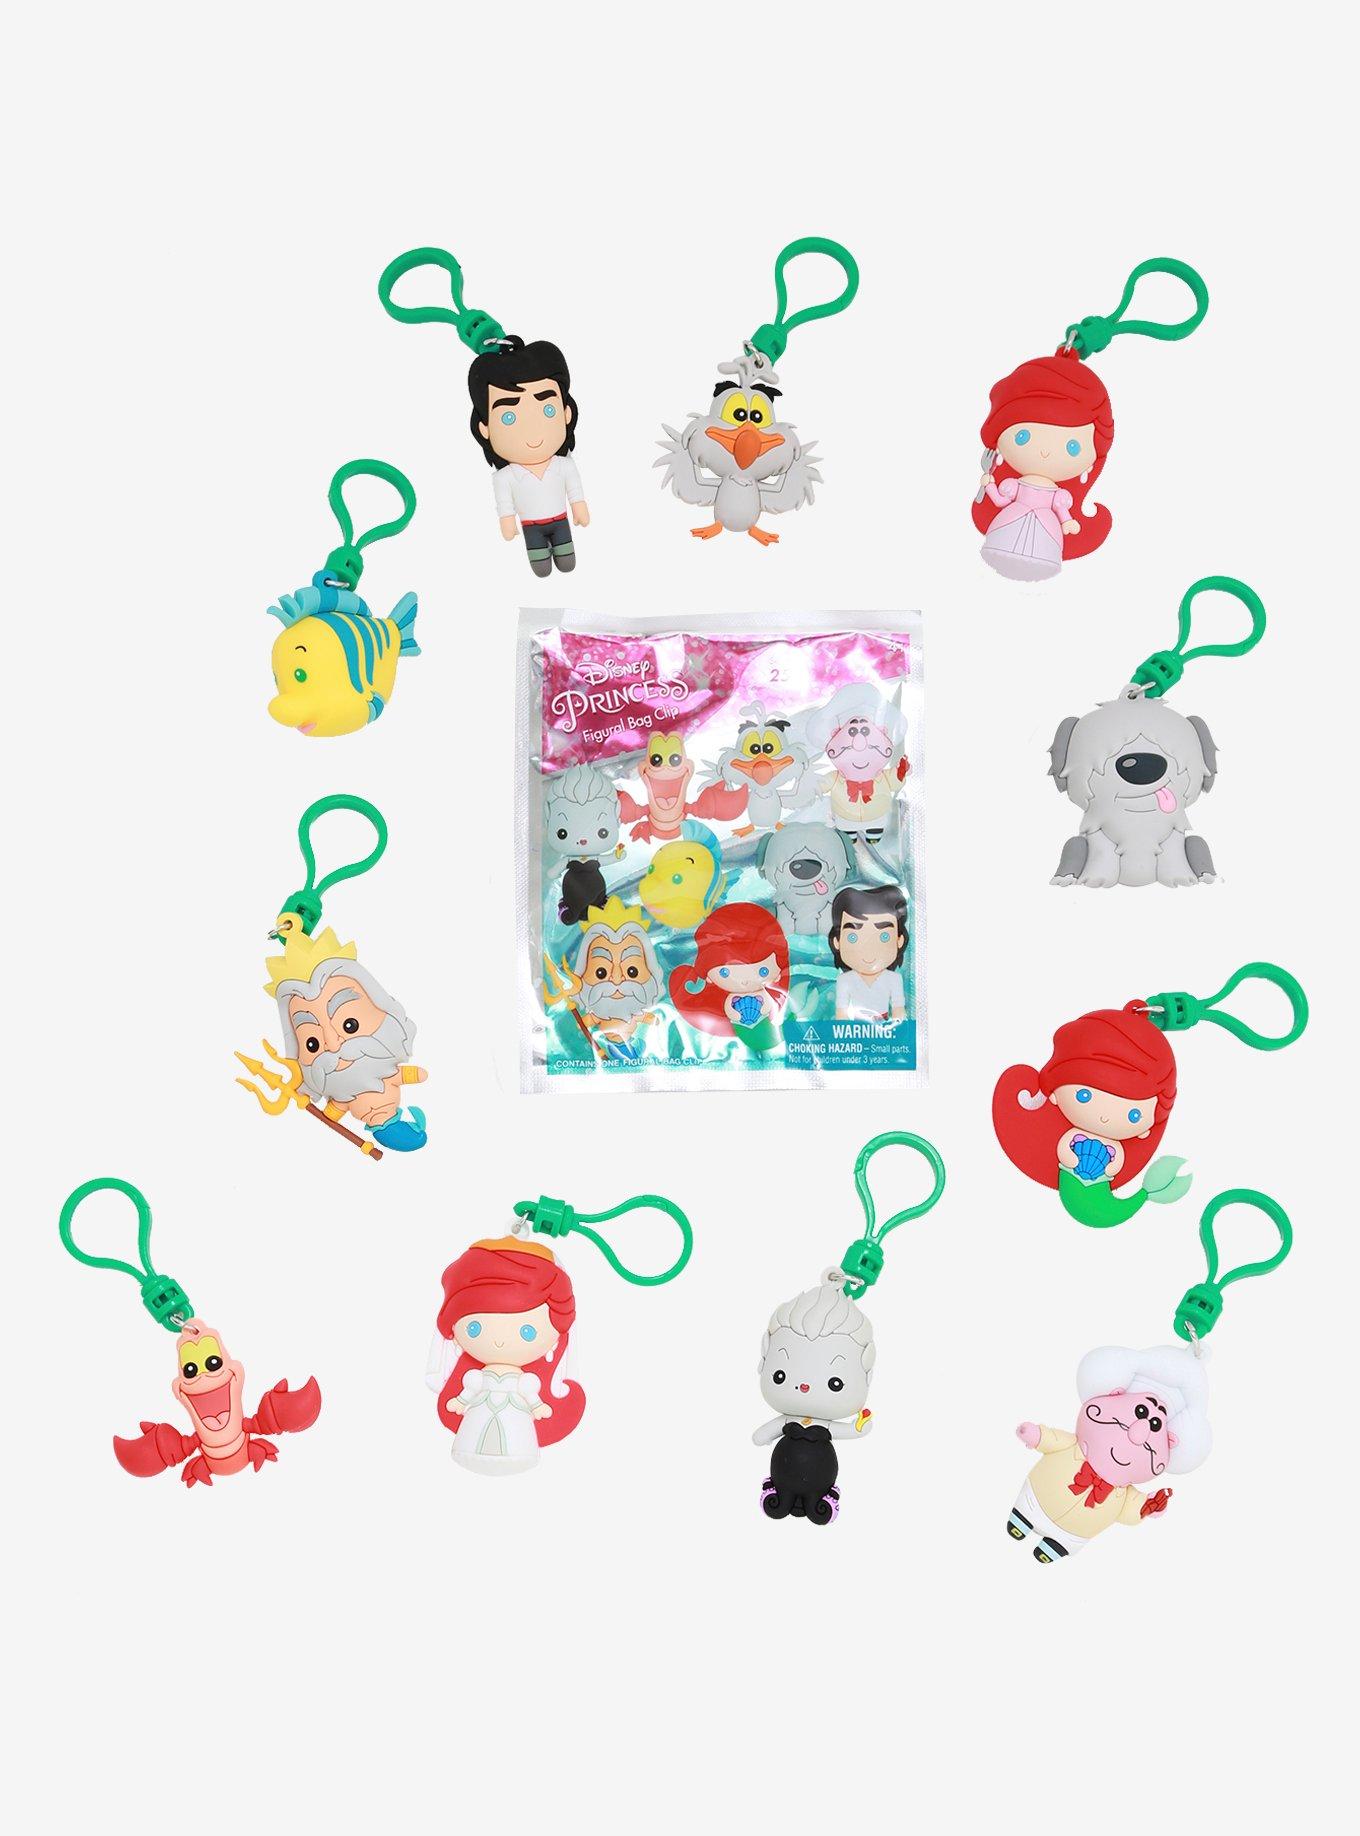 Disney Princess Series 25 The Little Mermaid Blind Bag Figural Key Chain